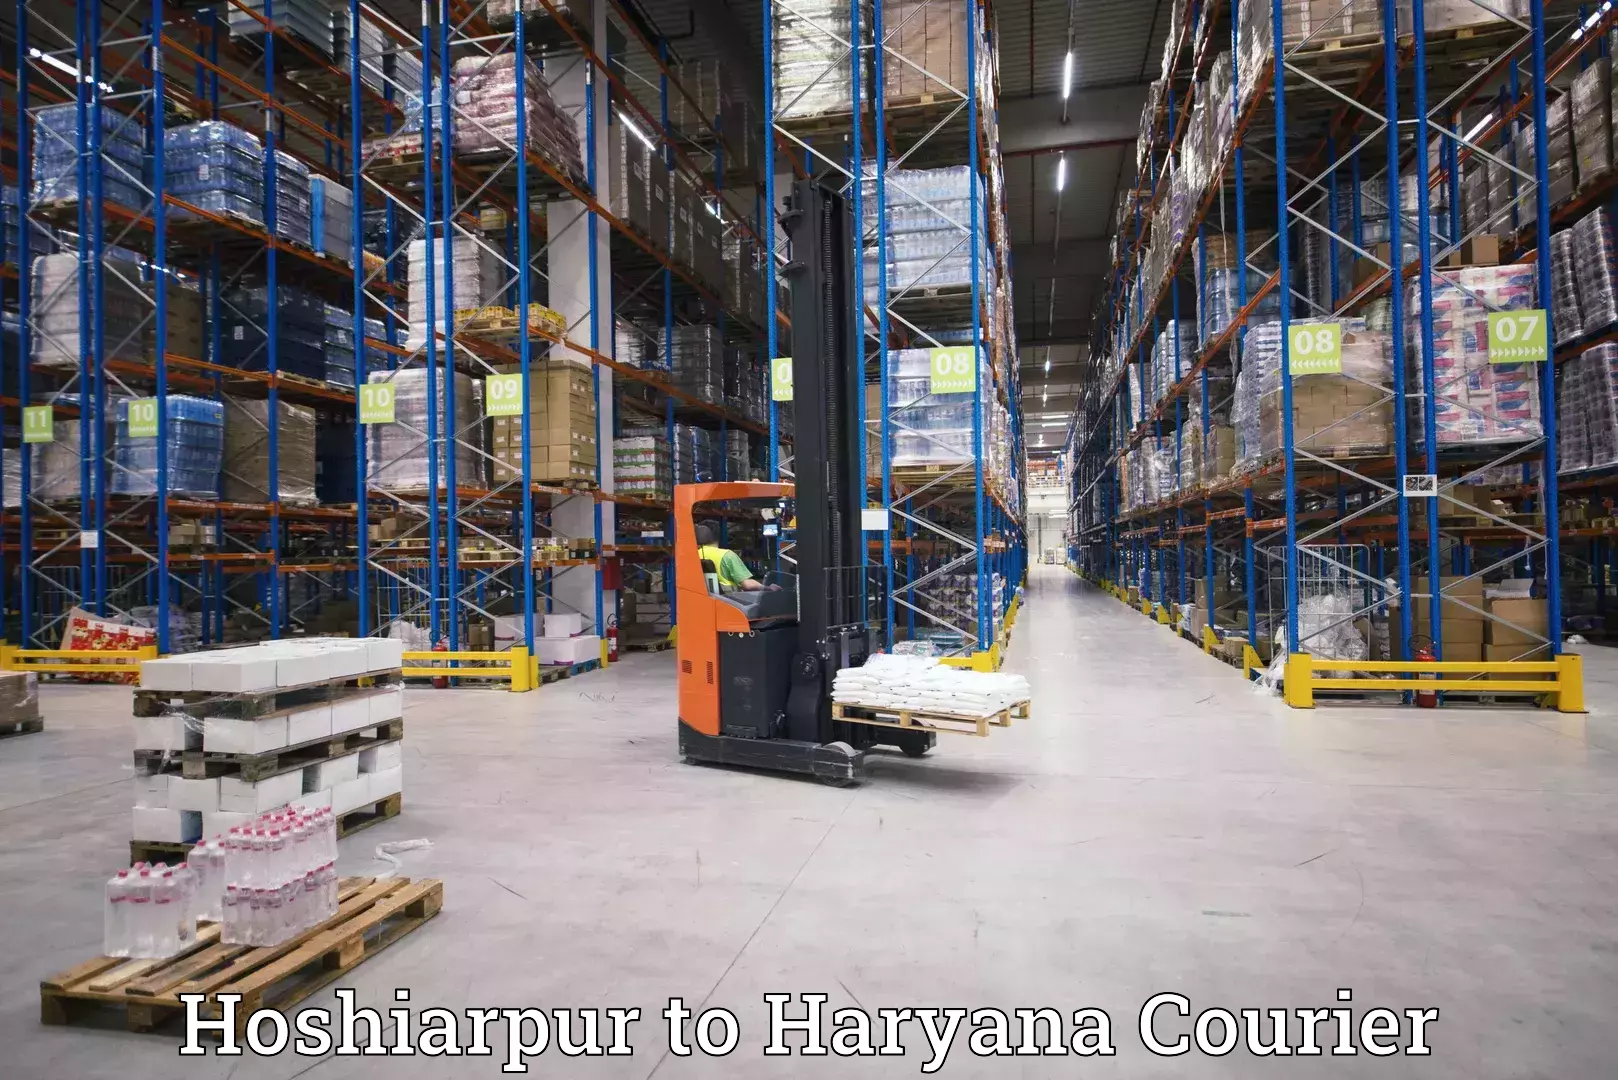 Global logistics network Hoshiarpur to Haryana